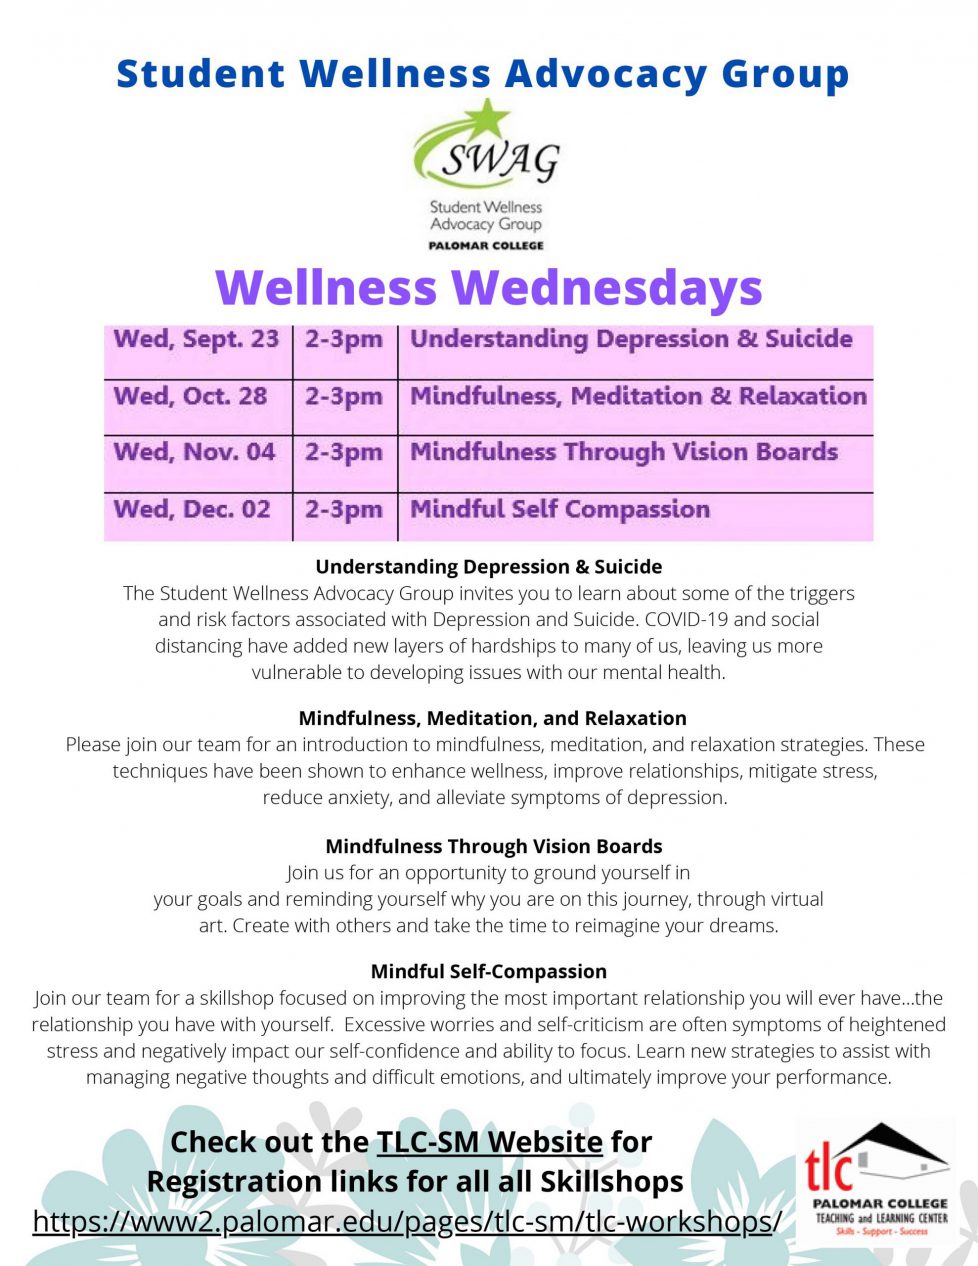 Wellness Wednesday Skillshop